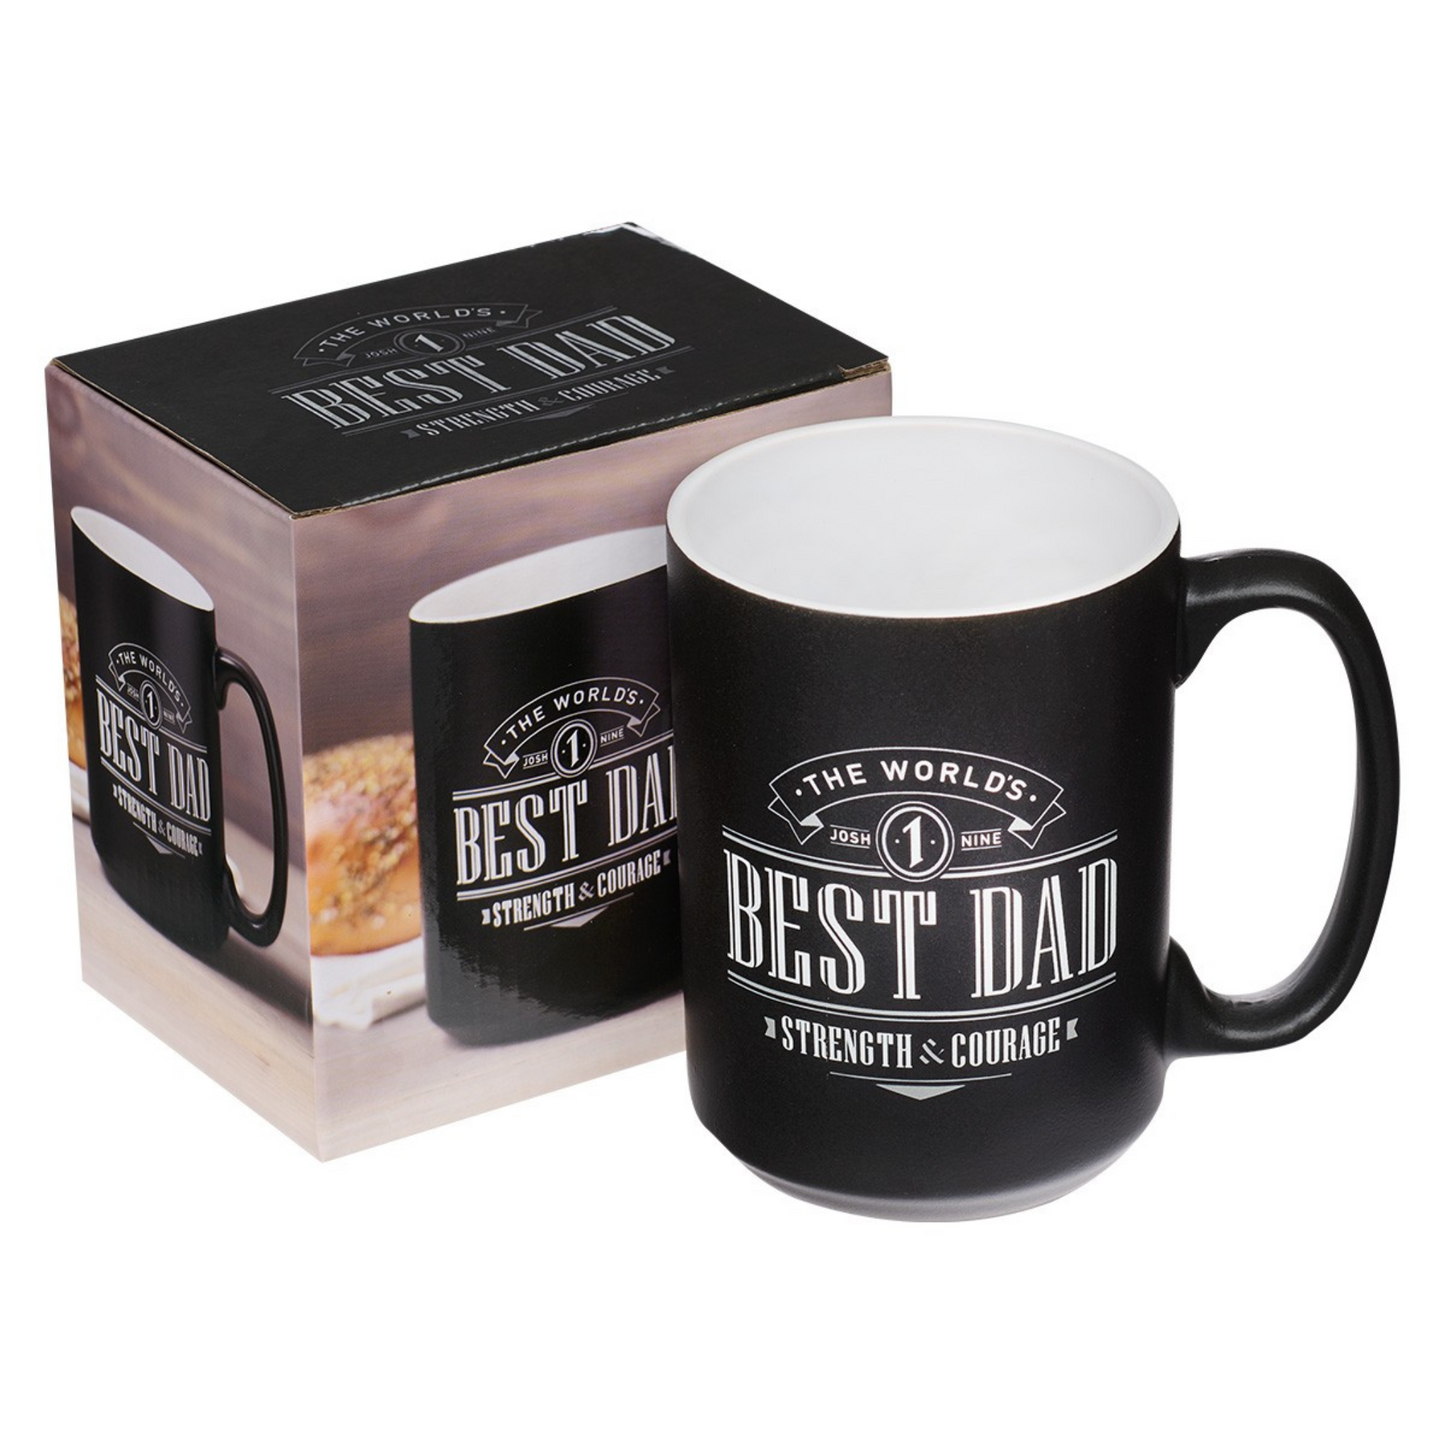 Ceramic Mug - The World's Best Dad, Joshua 1:9 (MUG553)